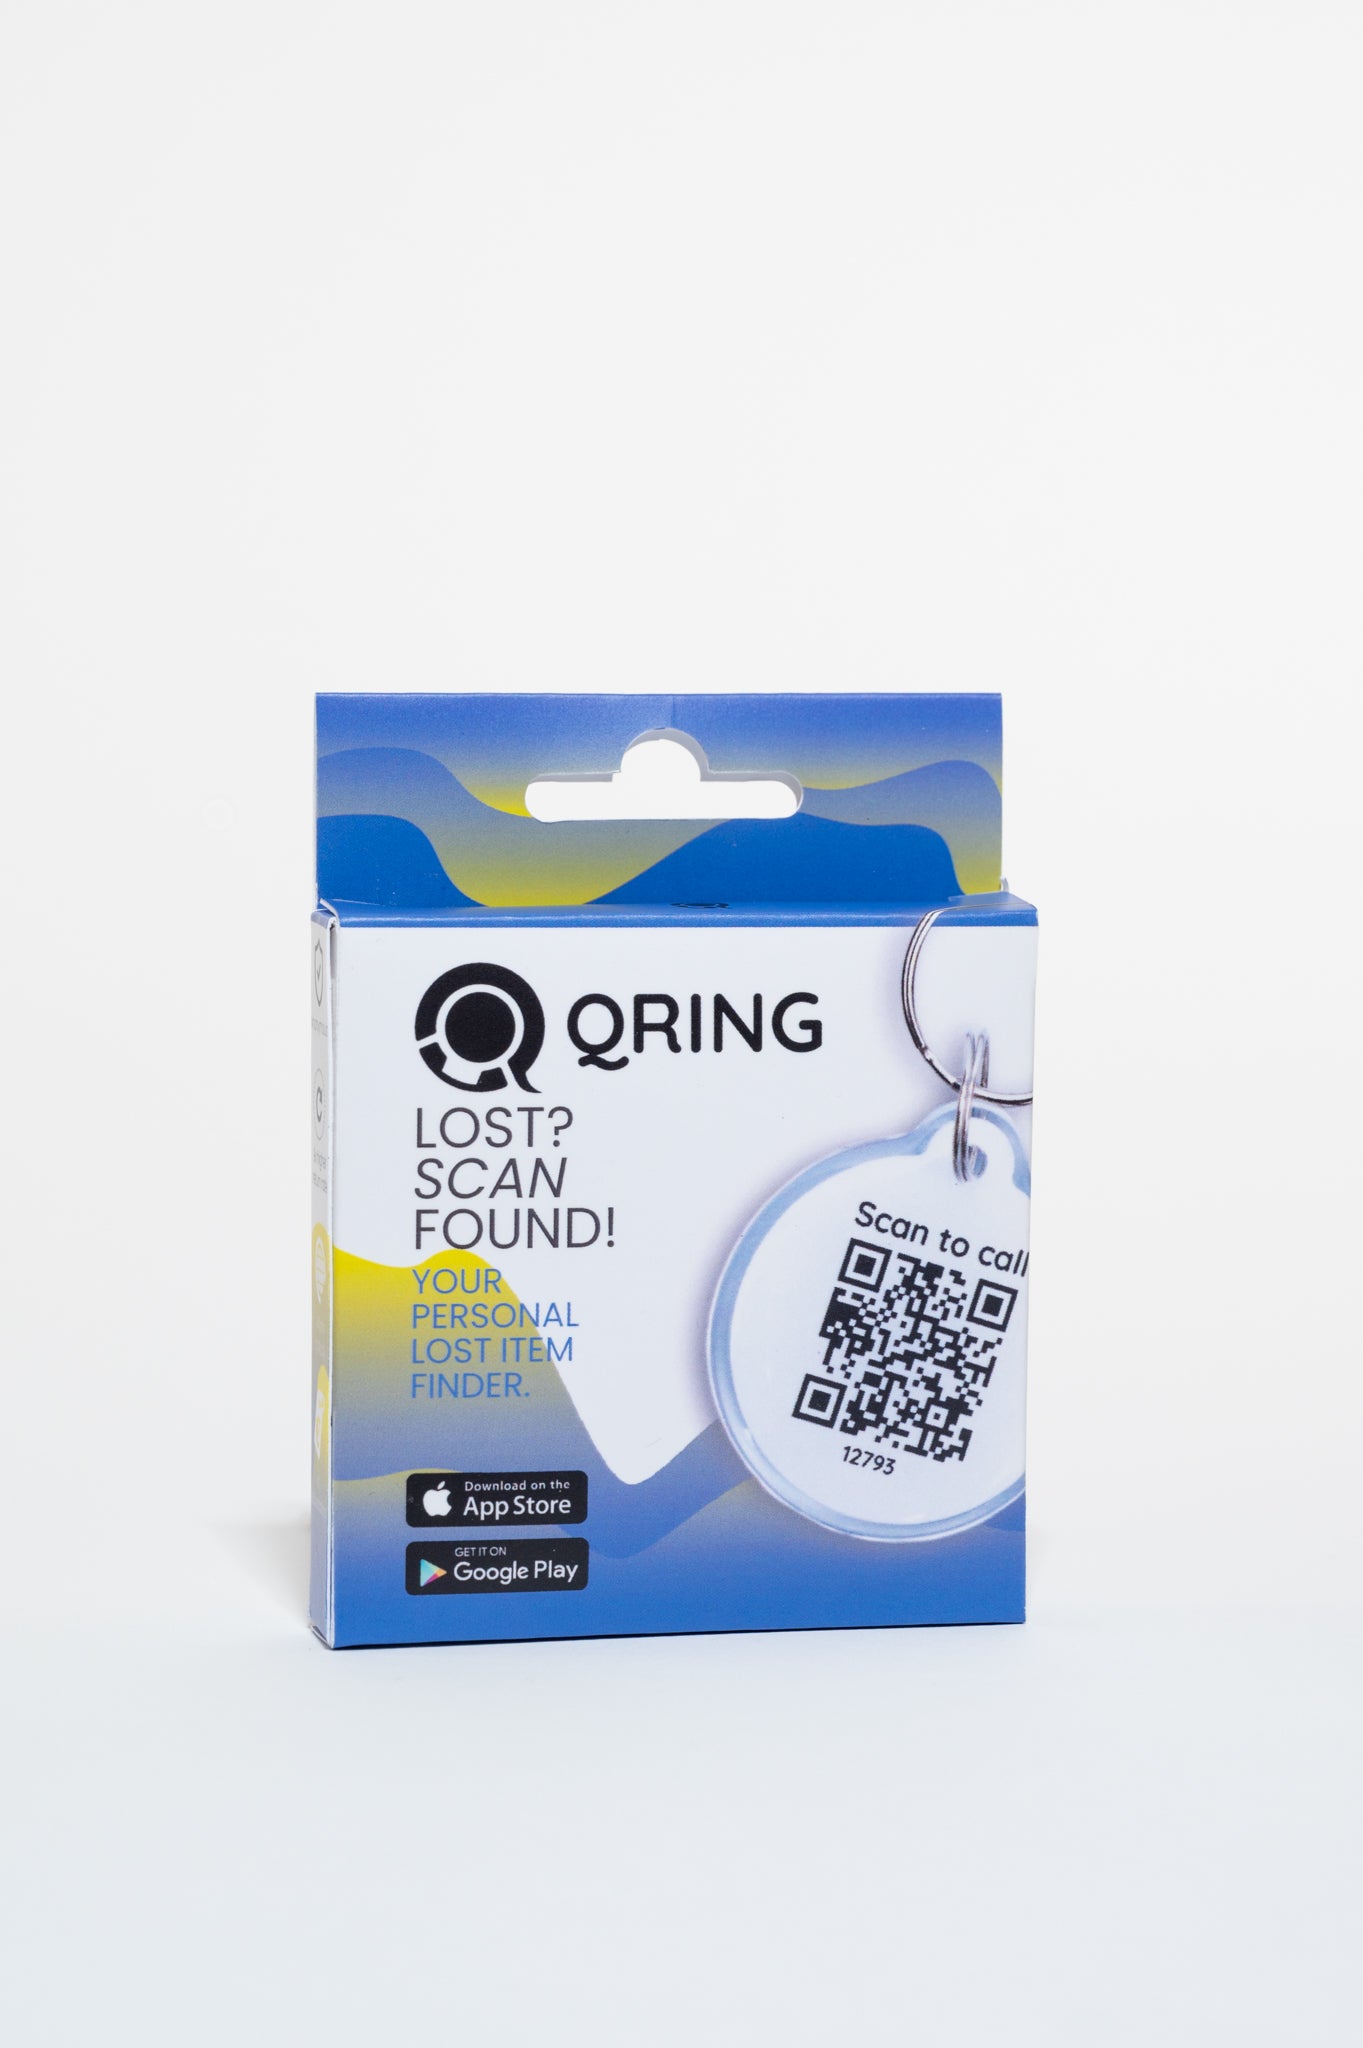 tand autobiografie goud Sleutelhanger met QR-code en NFC - Lost & found tag oplossing - QRing